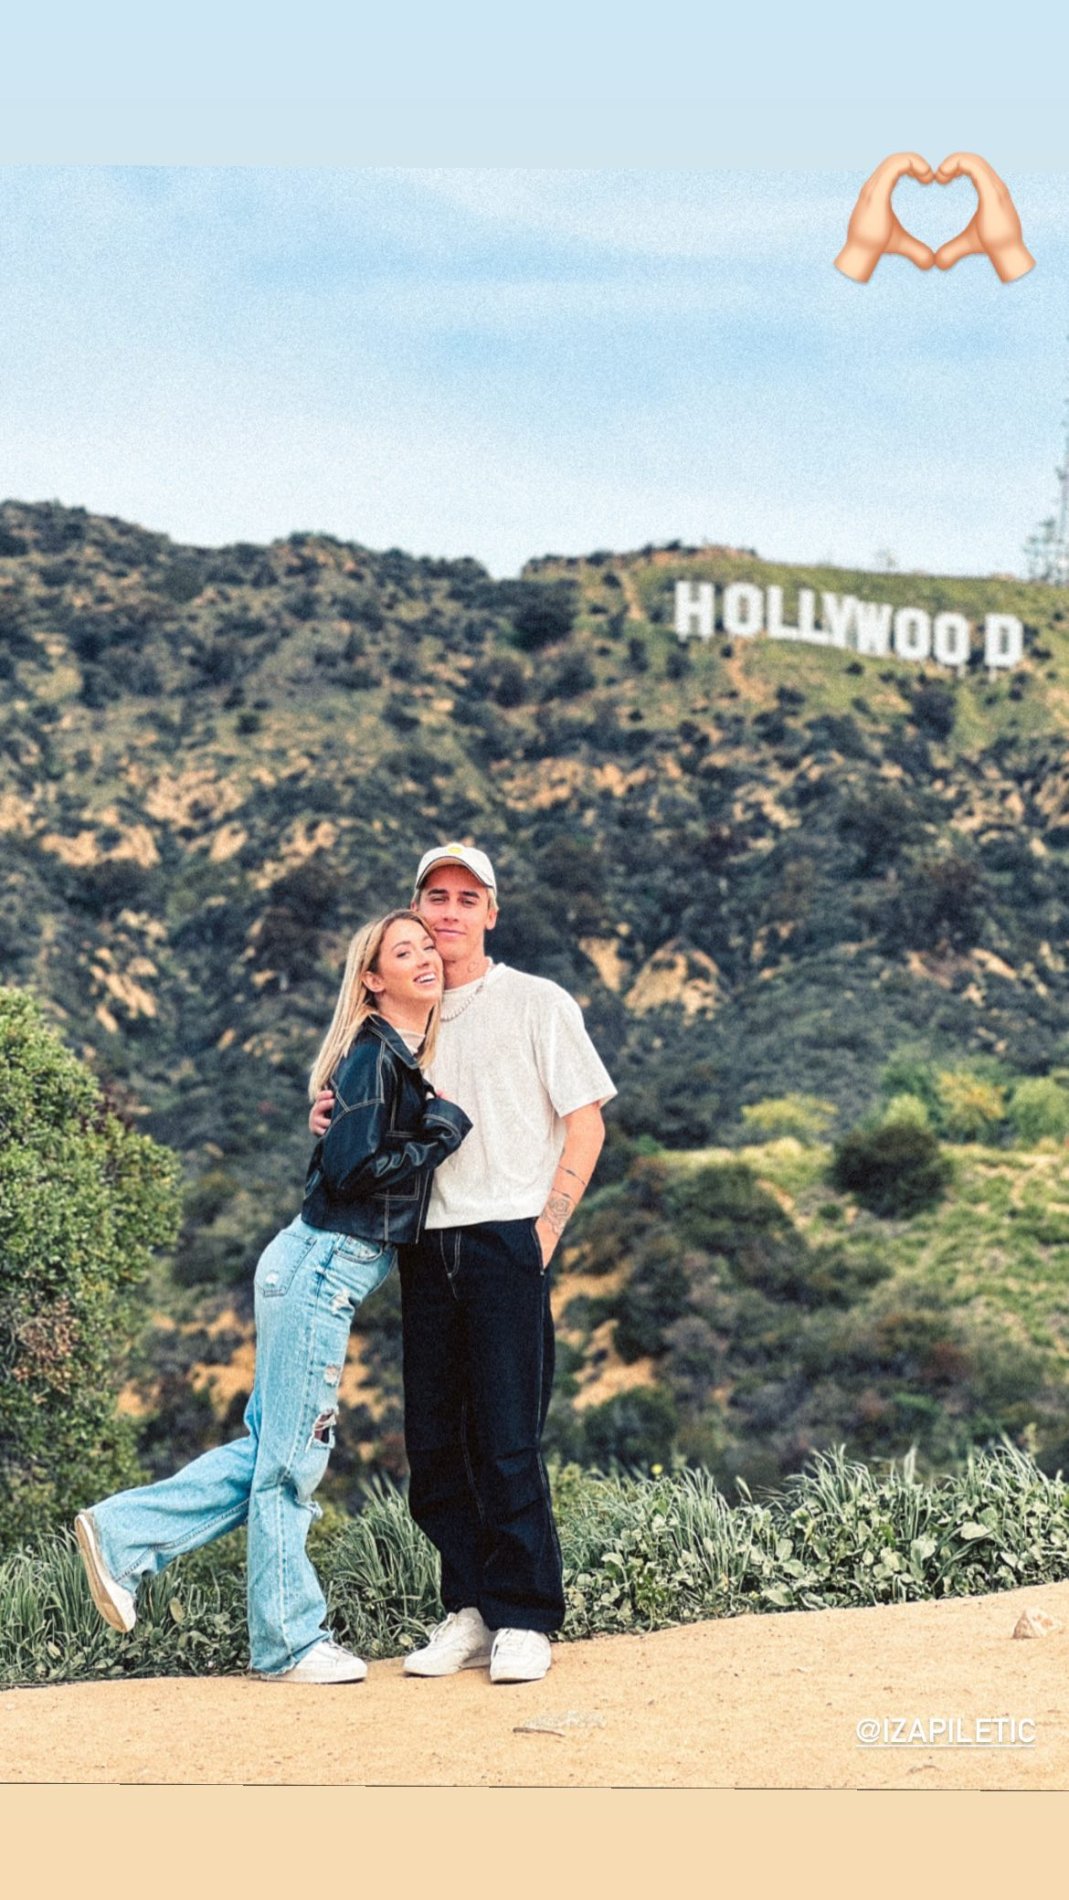 Anej in Iza sta v Los Angelesu. Vir: Instagram